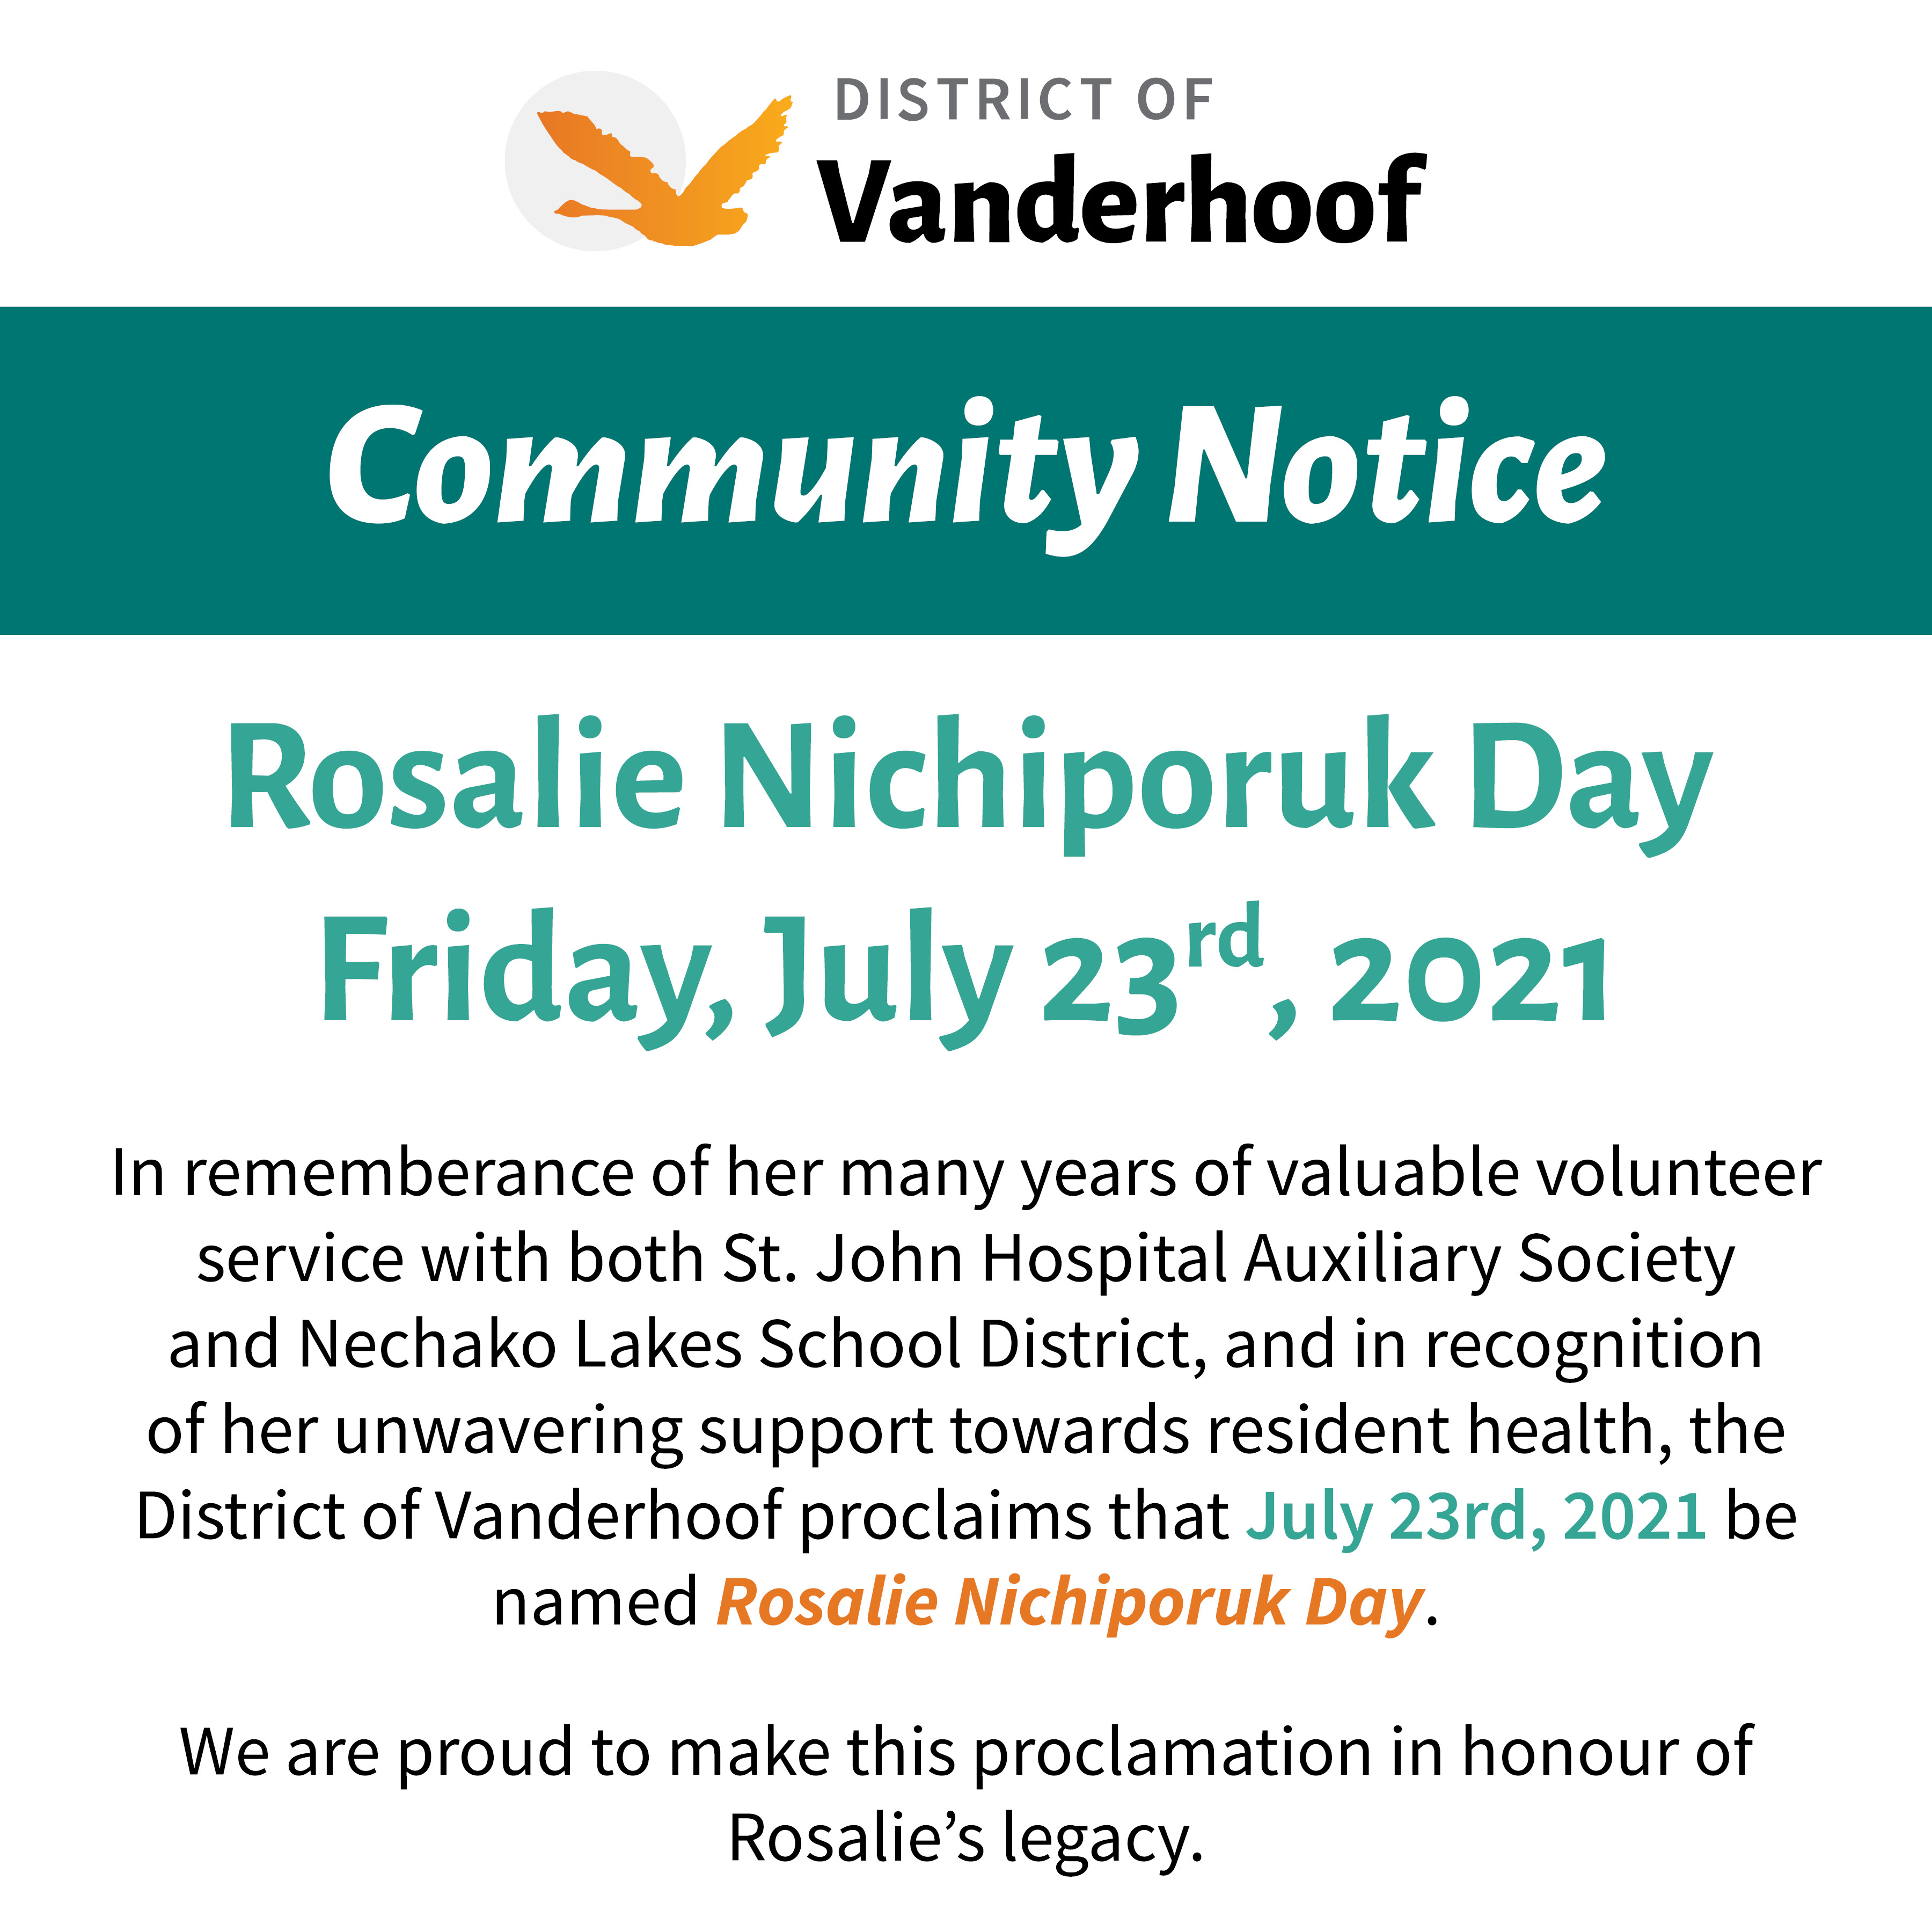 Community Notice, Rosalie Nichiporuk Day, Friday, July 23rd, 2021